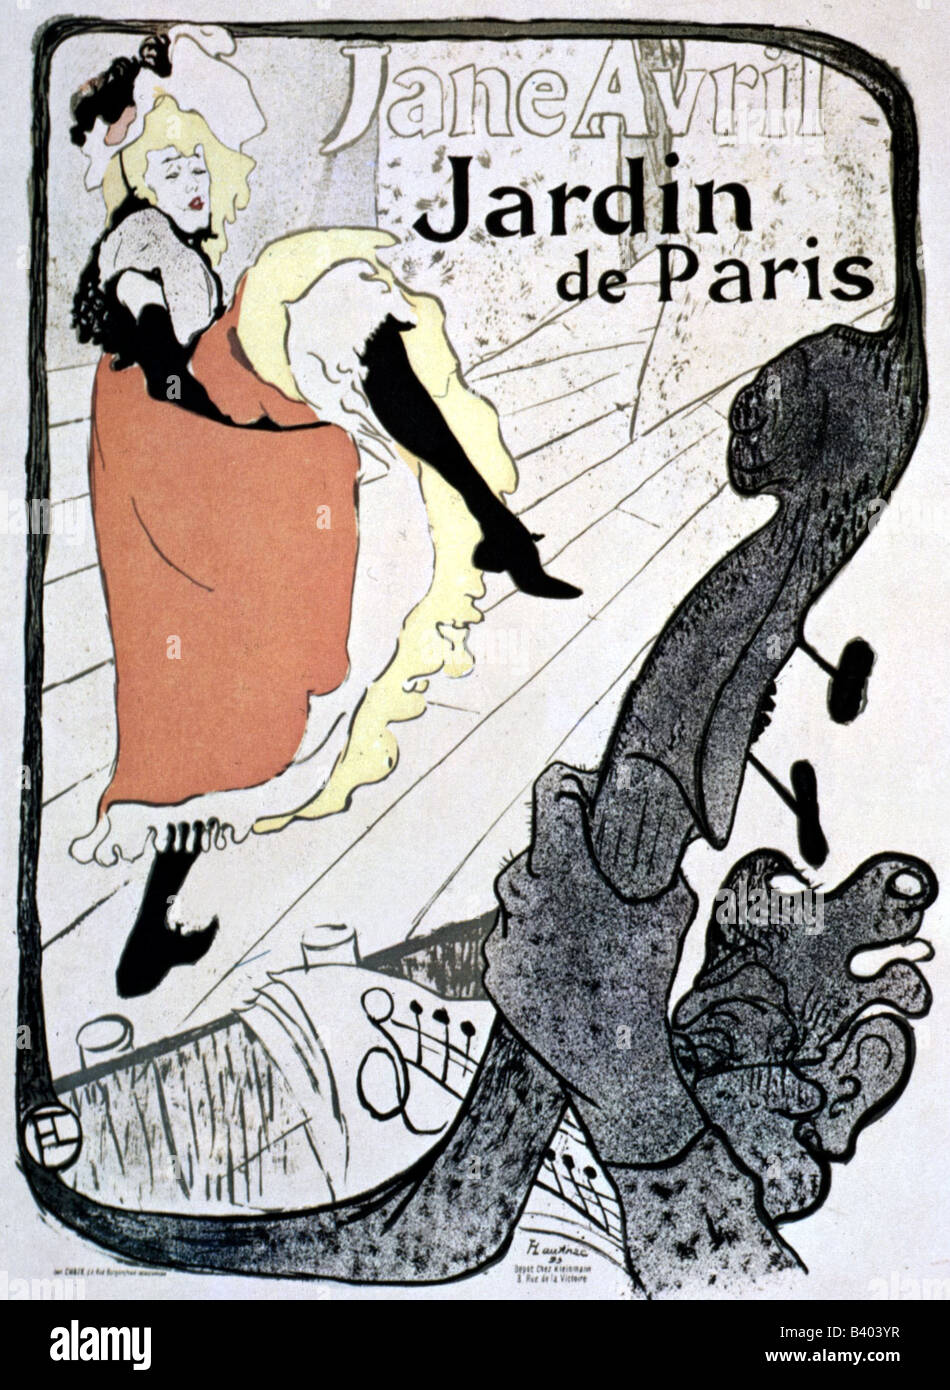 Bellas artes - Henri de Toulouse-Lautrec, (1864 - 1901), un cartel para el Jardin de Paris, con la bailarina Jane Avril, 1893 siglo xix, adv Foto de stock